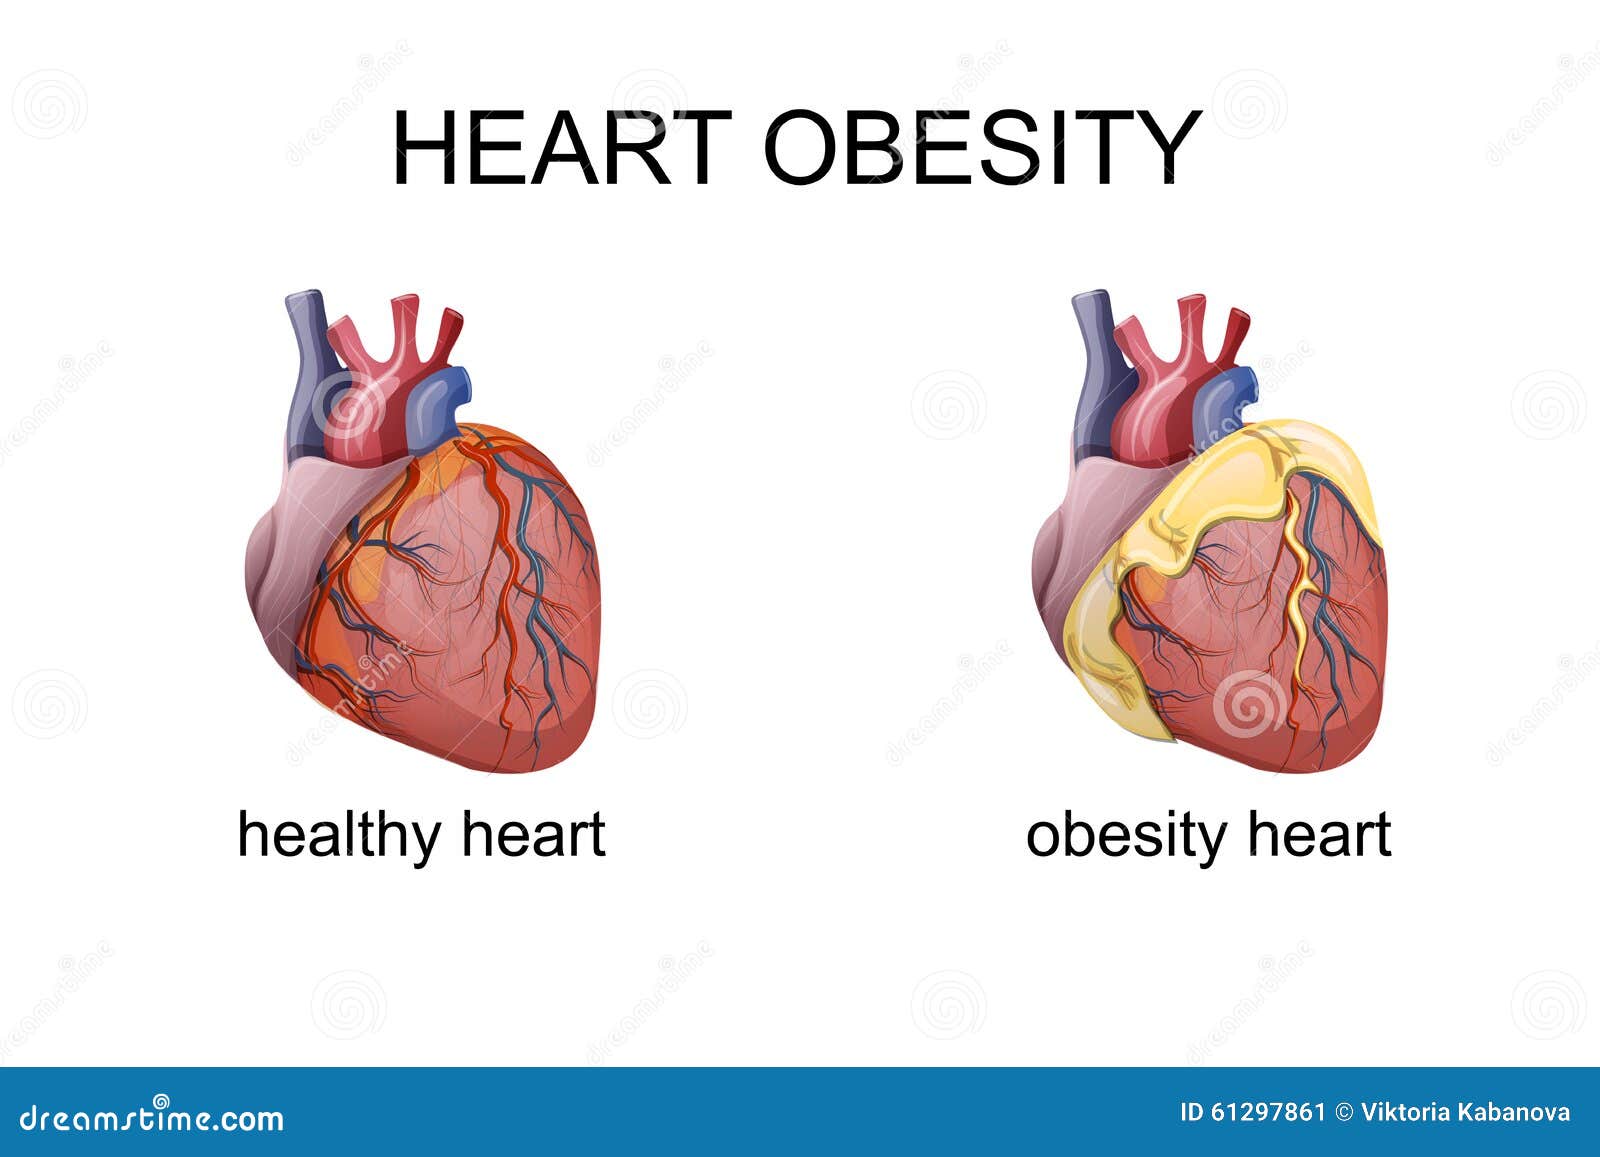 Illustration on obesity